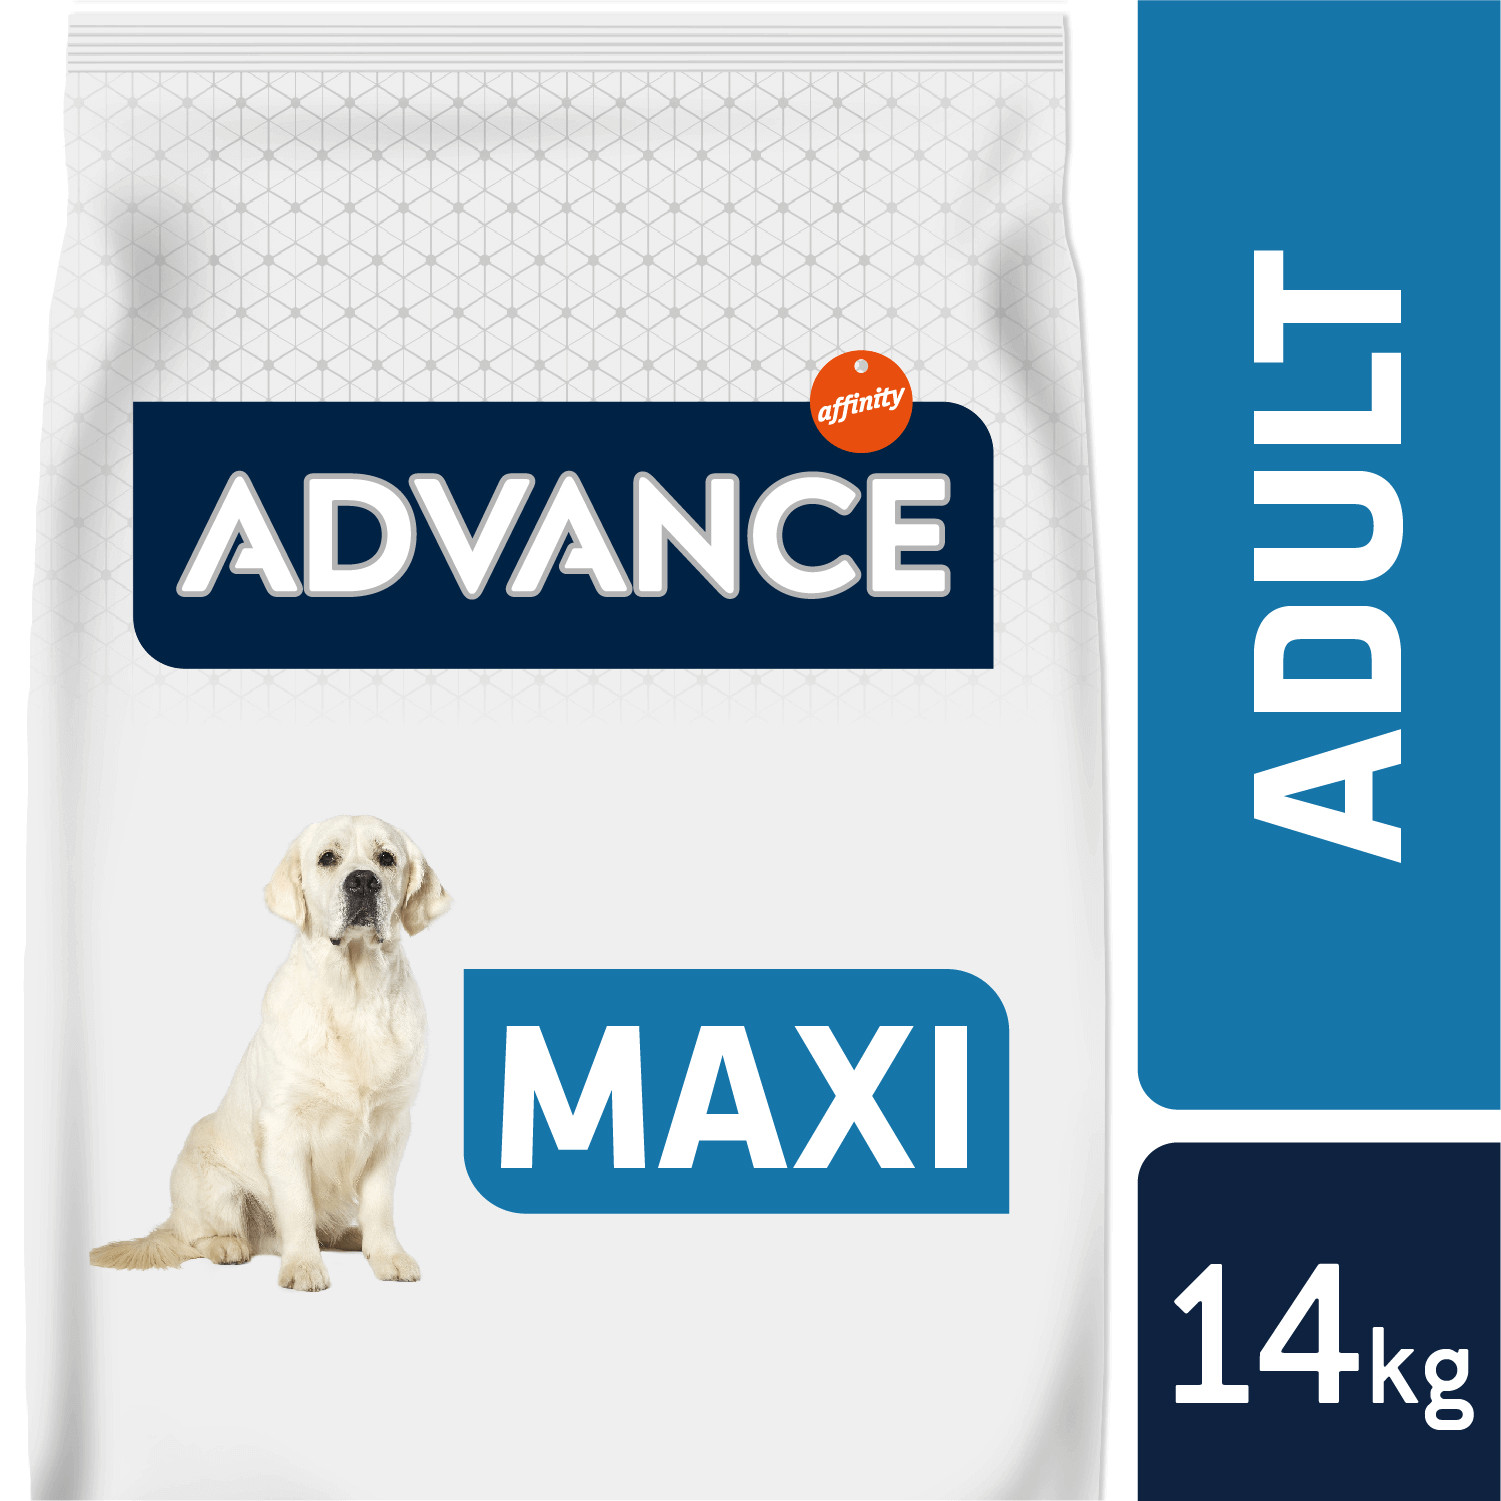 Advance Maxi Light hondenvoer